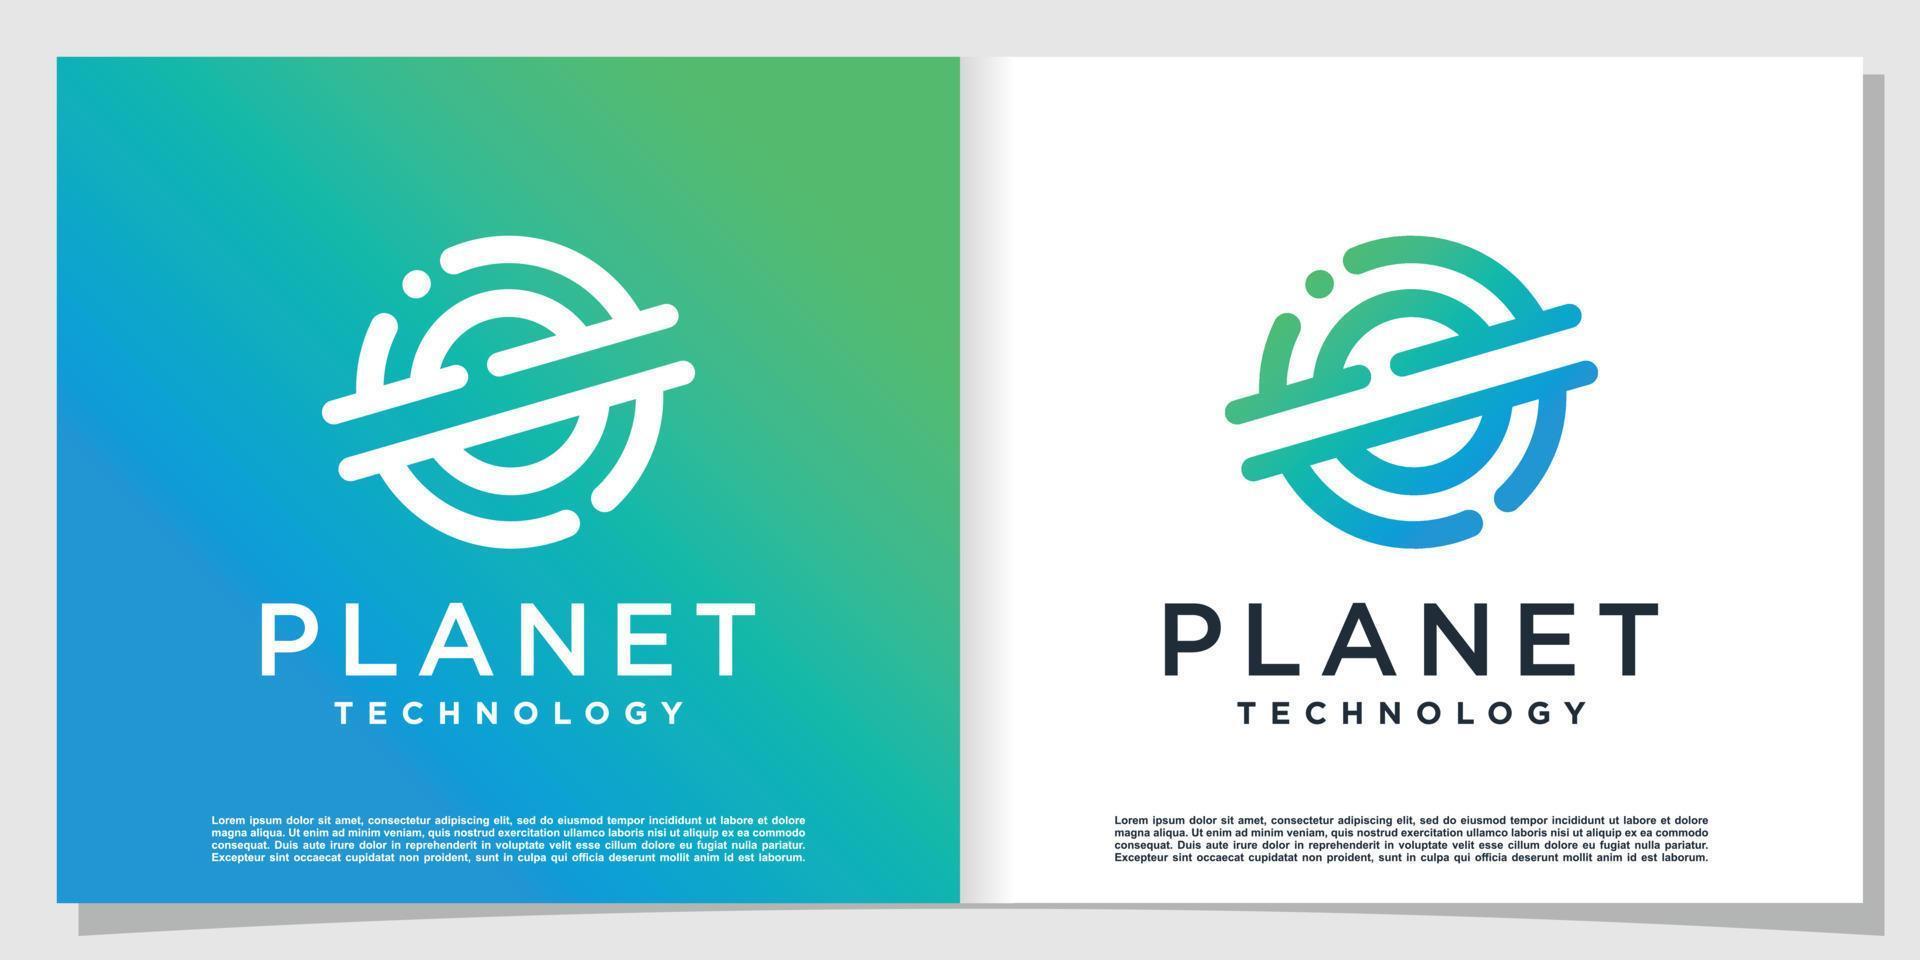 Planet Tech Logo mit modernem Premium-Vektor im kreativen Stil vektor